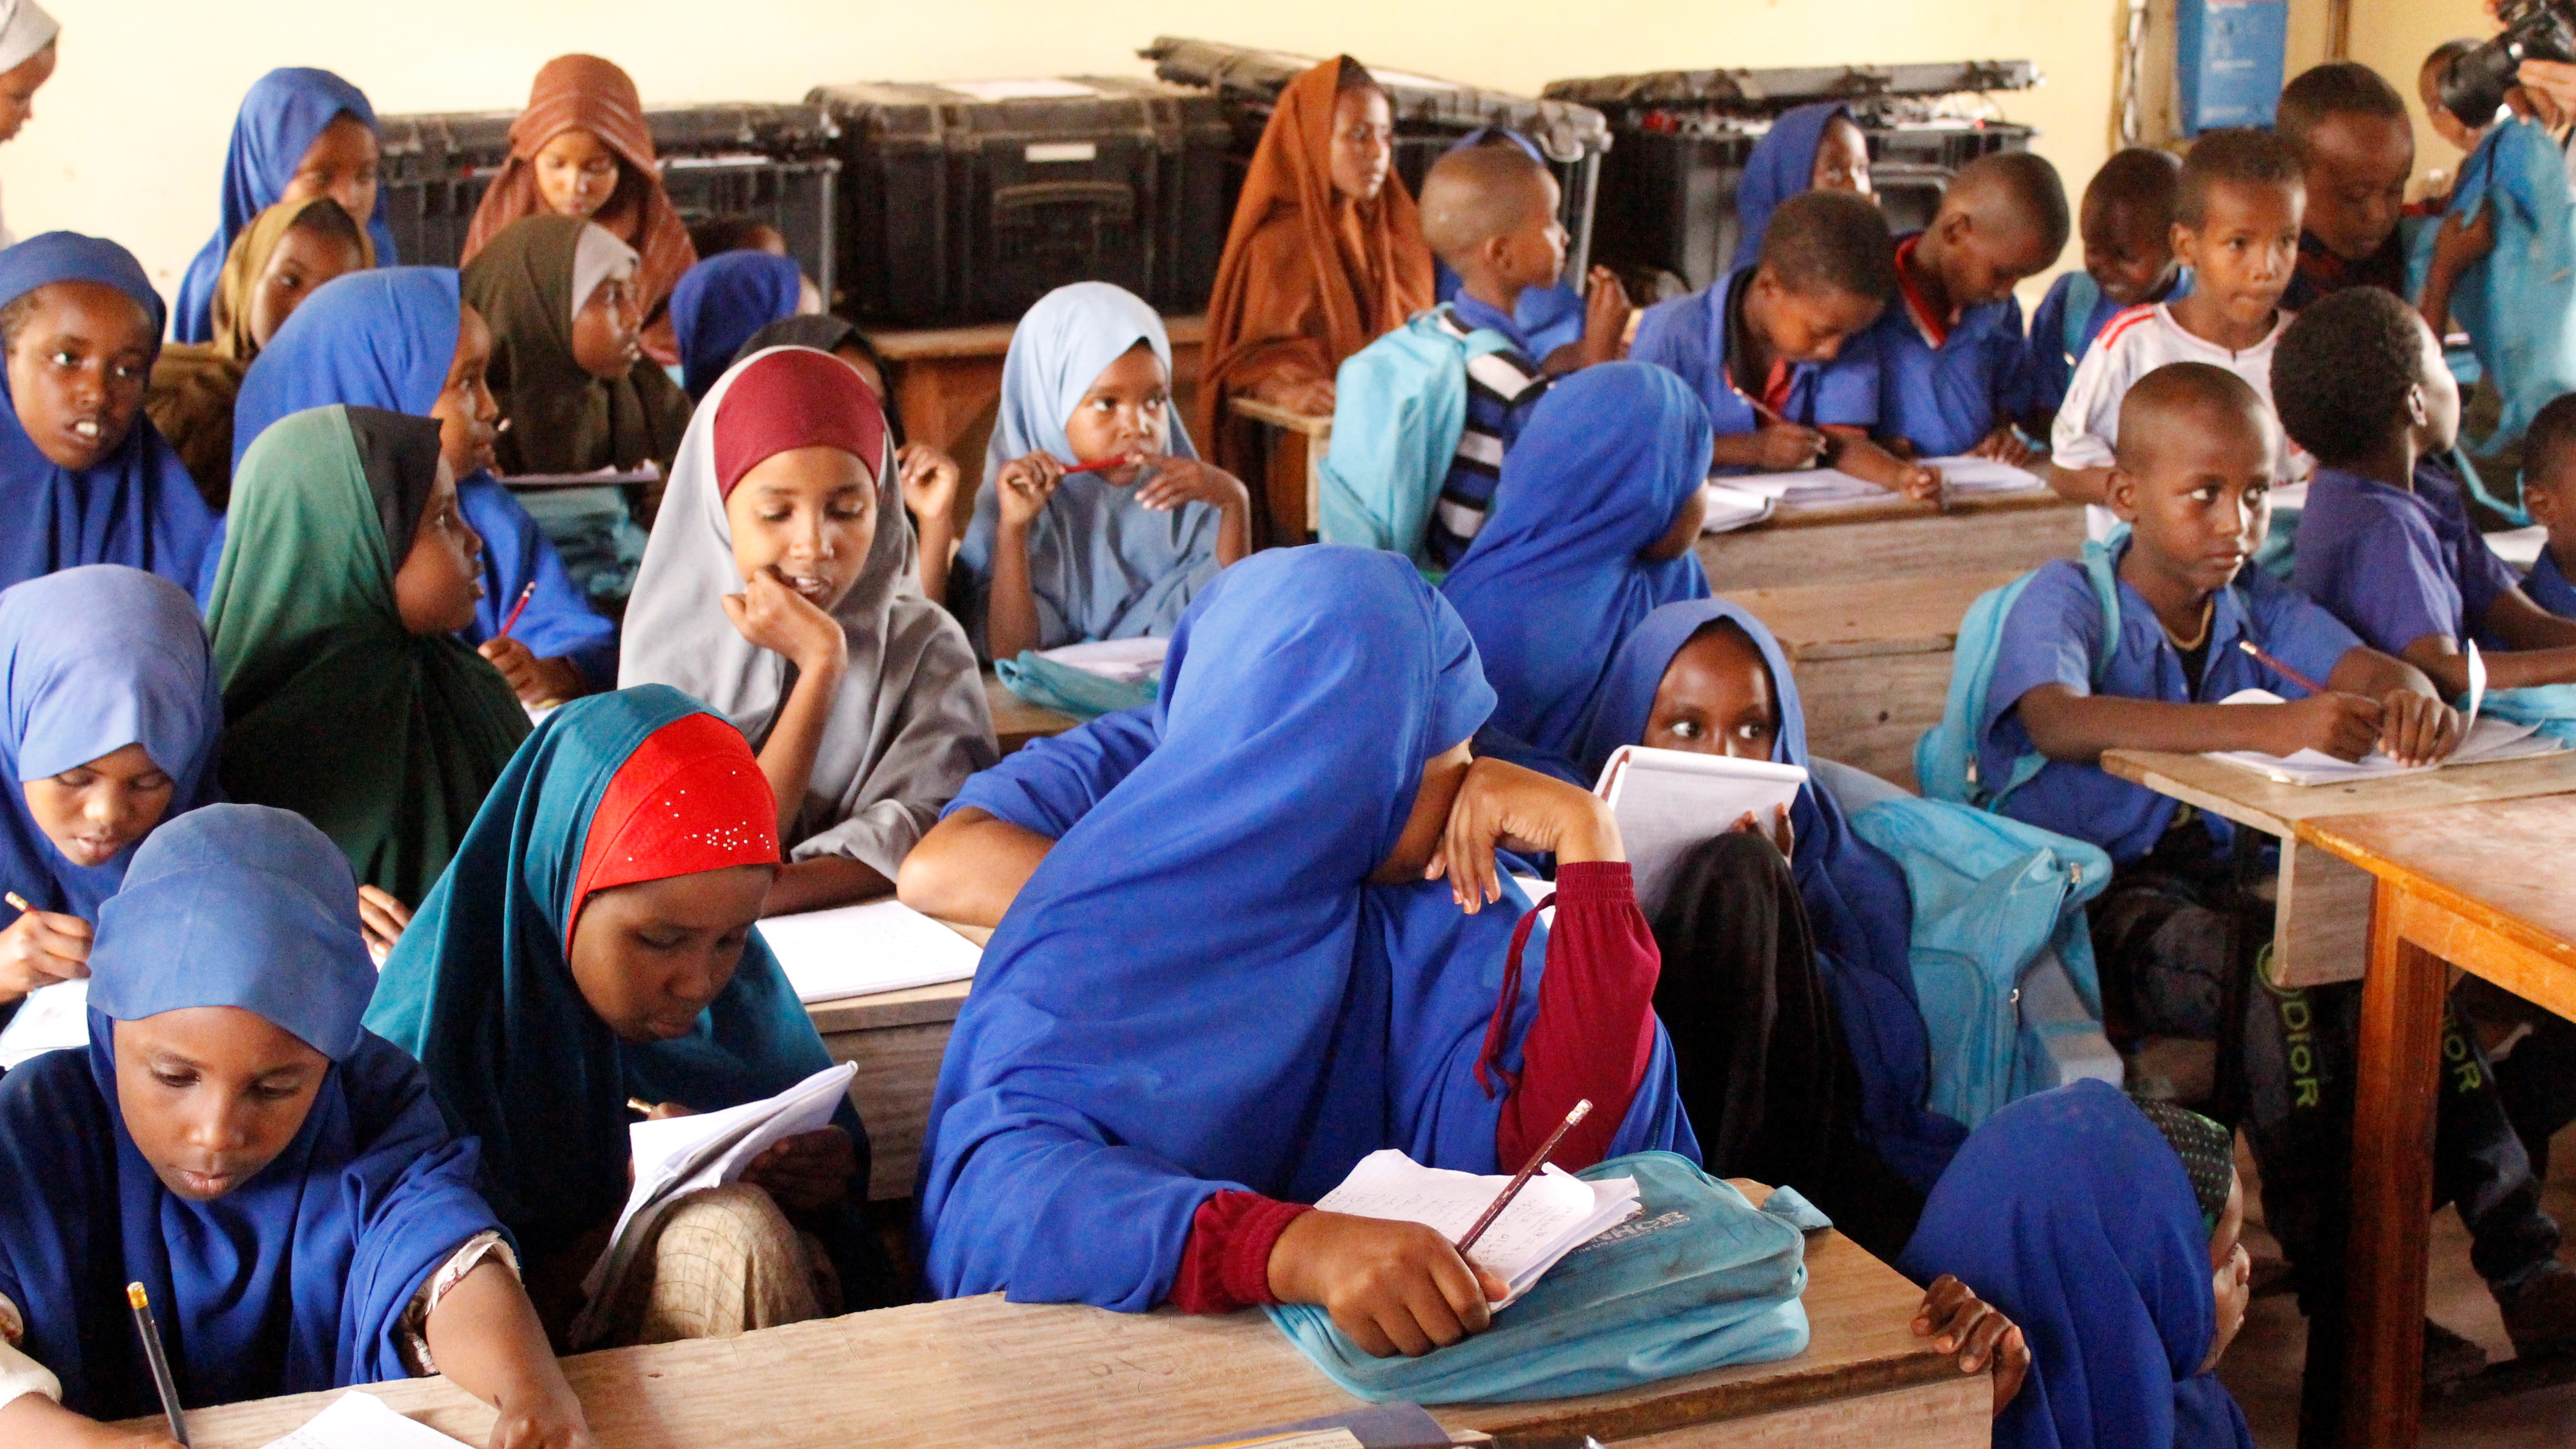 لاجئون صوماليون في المدرسة بمخيم داداب للاجئين - كينيا. Somali refugees attend school in the Daadab refugee camp (image: Erik Siegl)